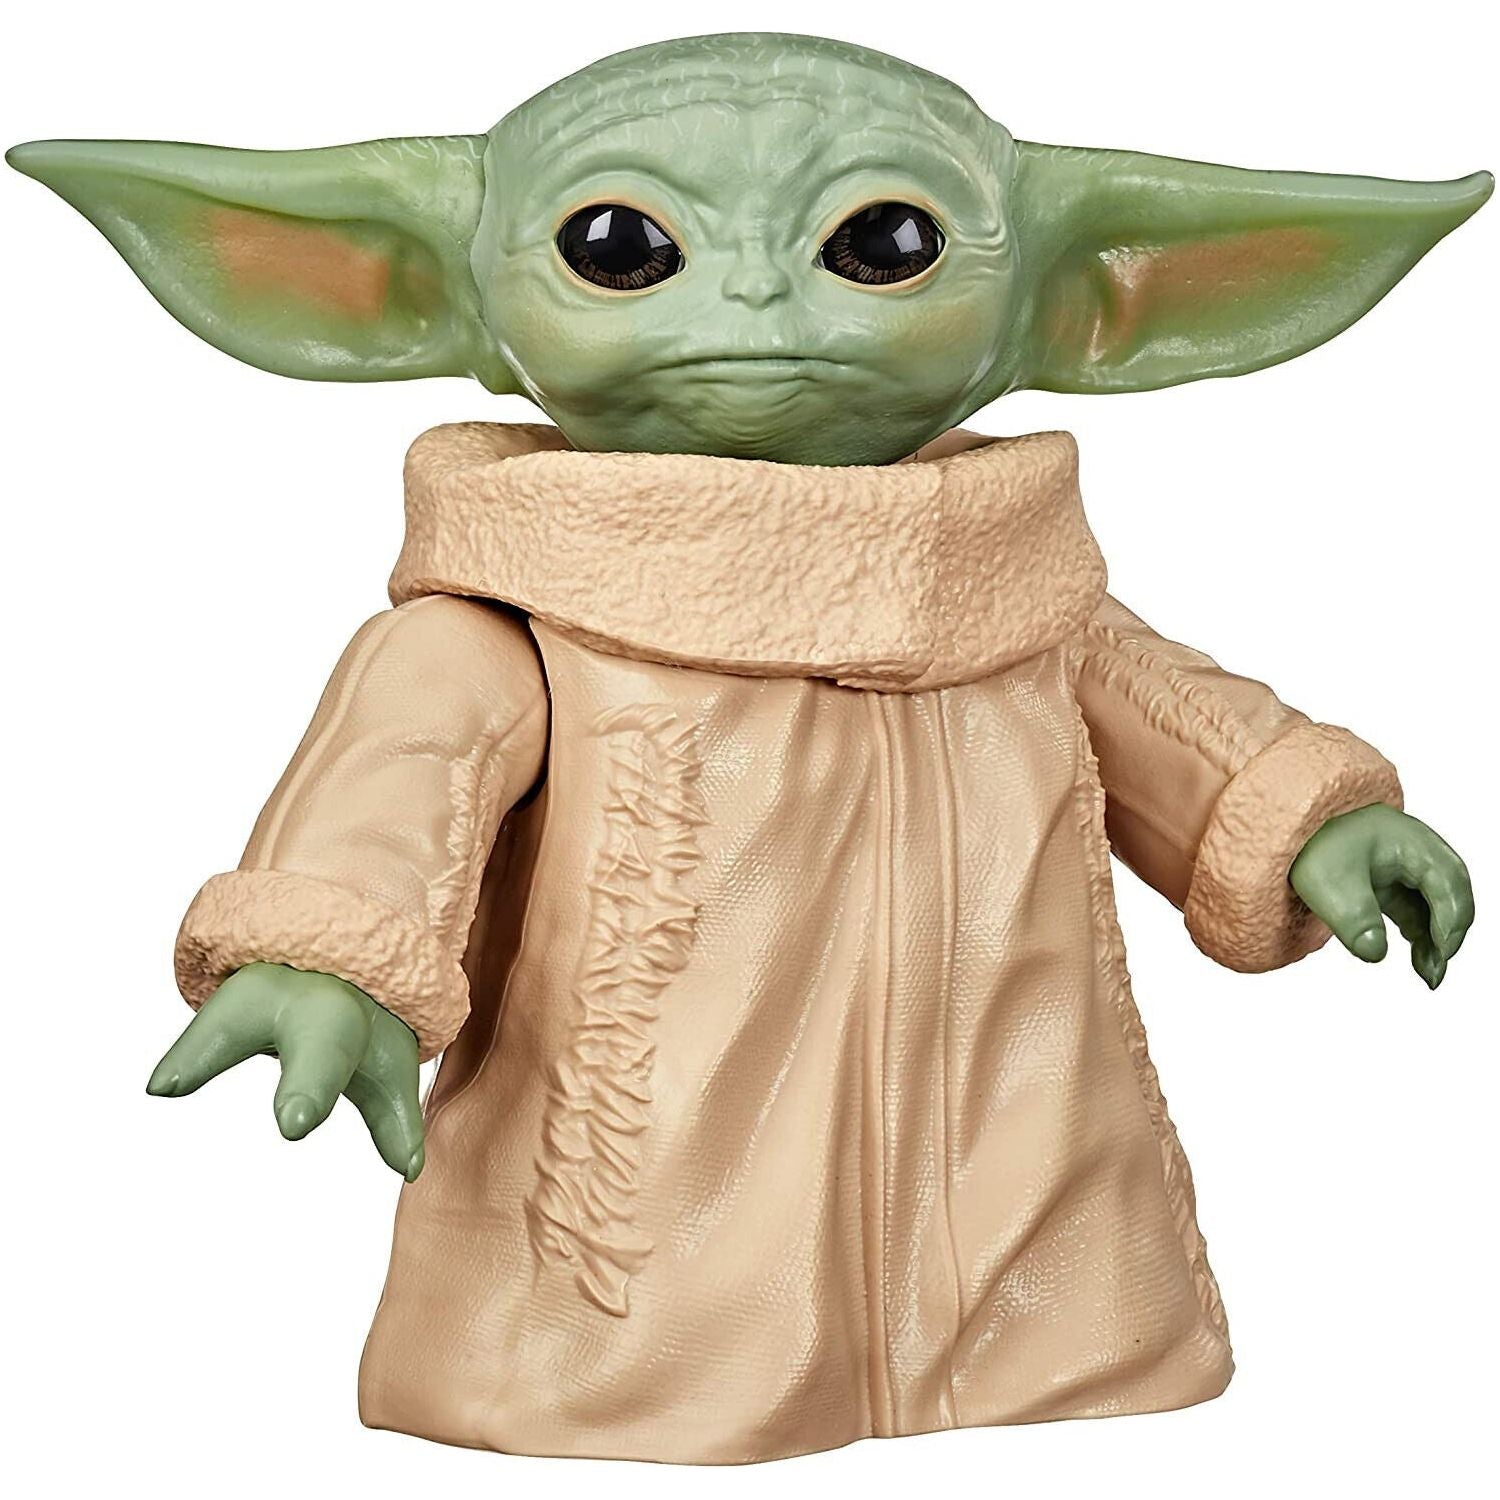 Hasbro Disney The Mandalorian Baby Yoda Star Wars The Child